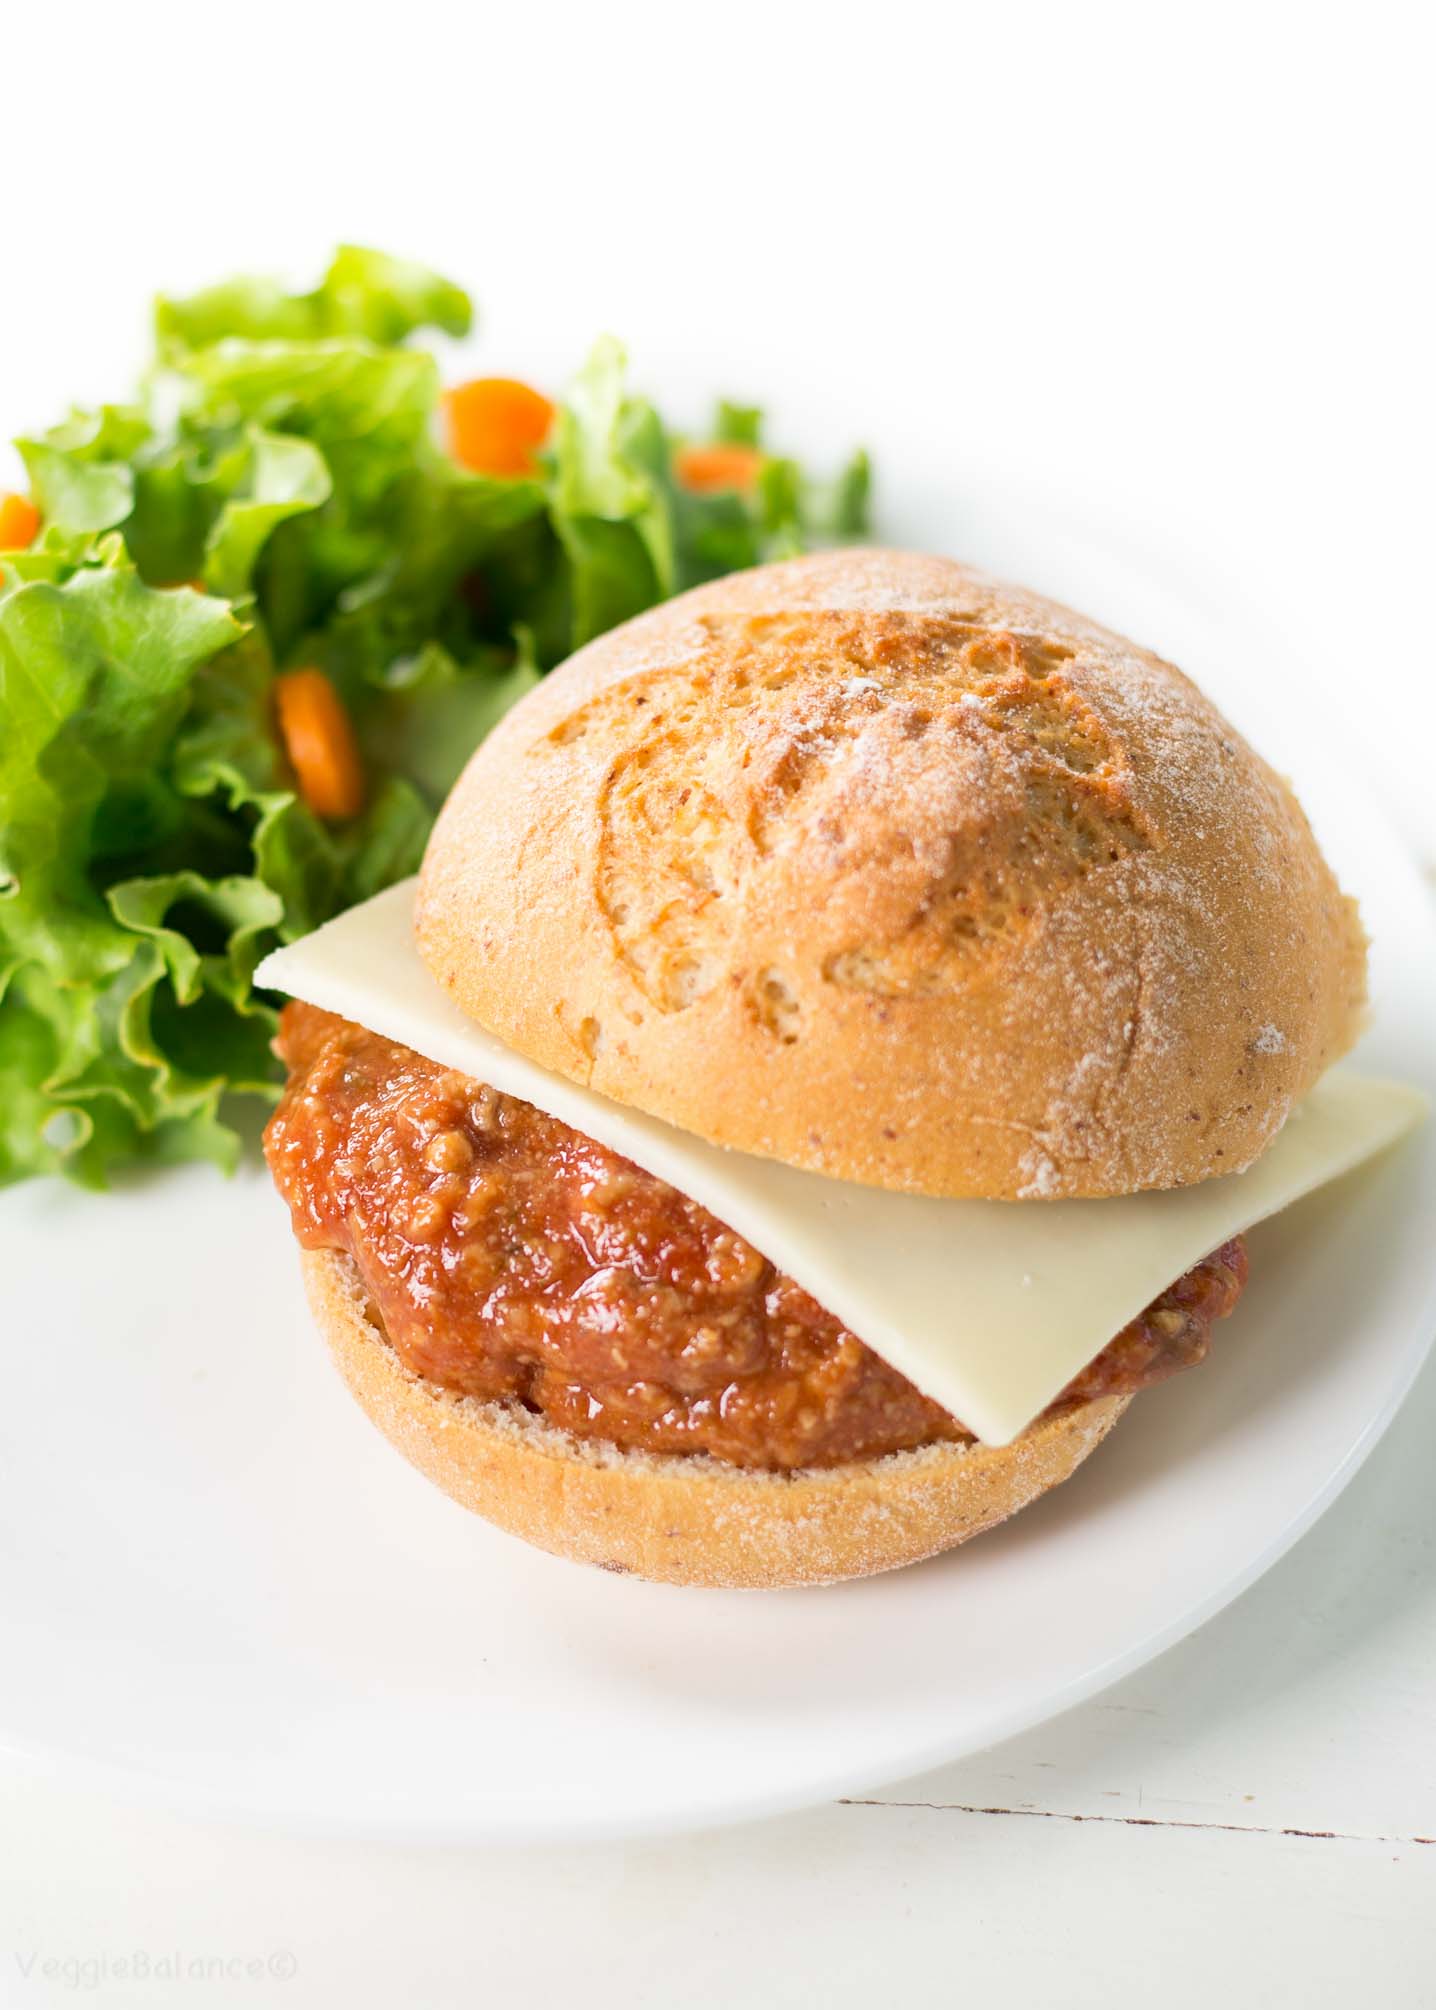 Vegetarian Sloppy Joes recipe on gluten-free bun